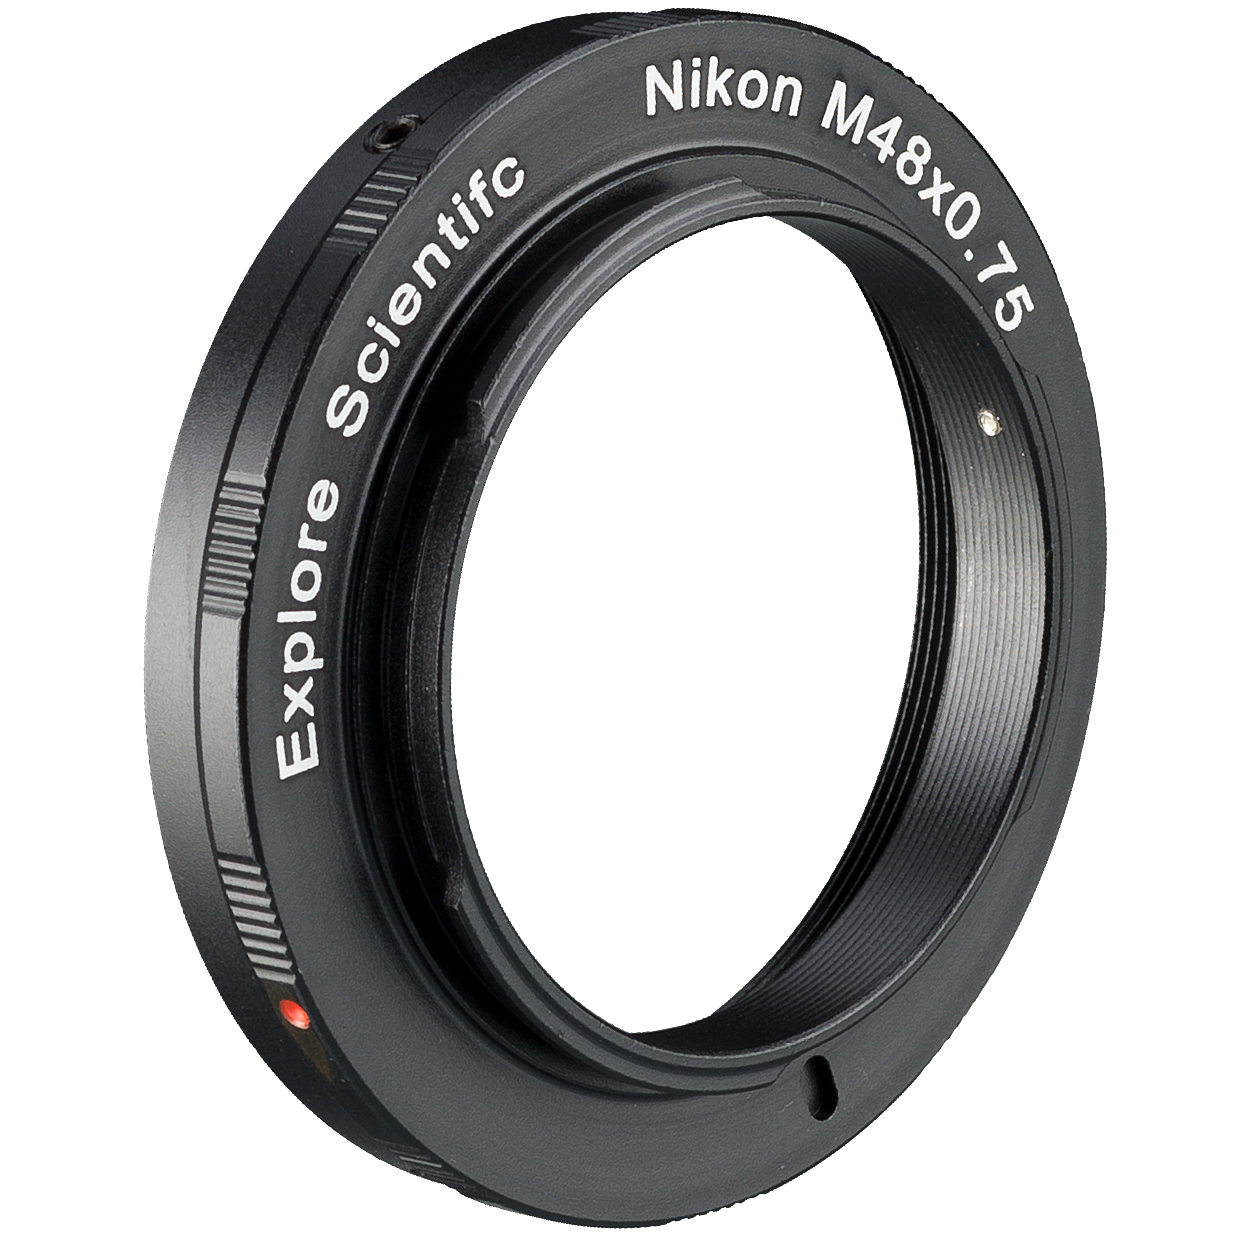 EXPLORE SCIENTIFIC Kamera-Ring M48x0.75 für Nikon  